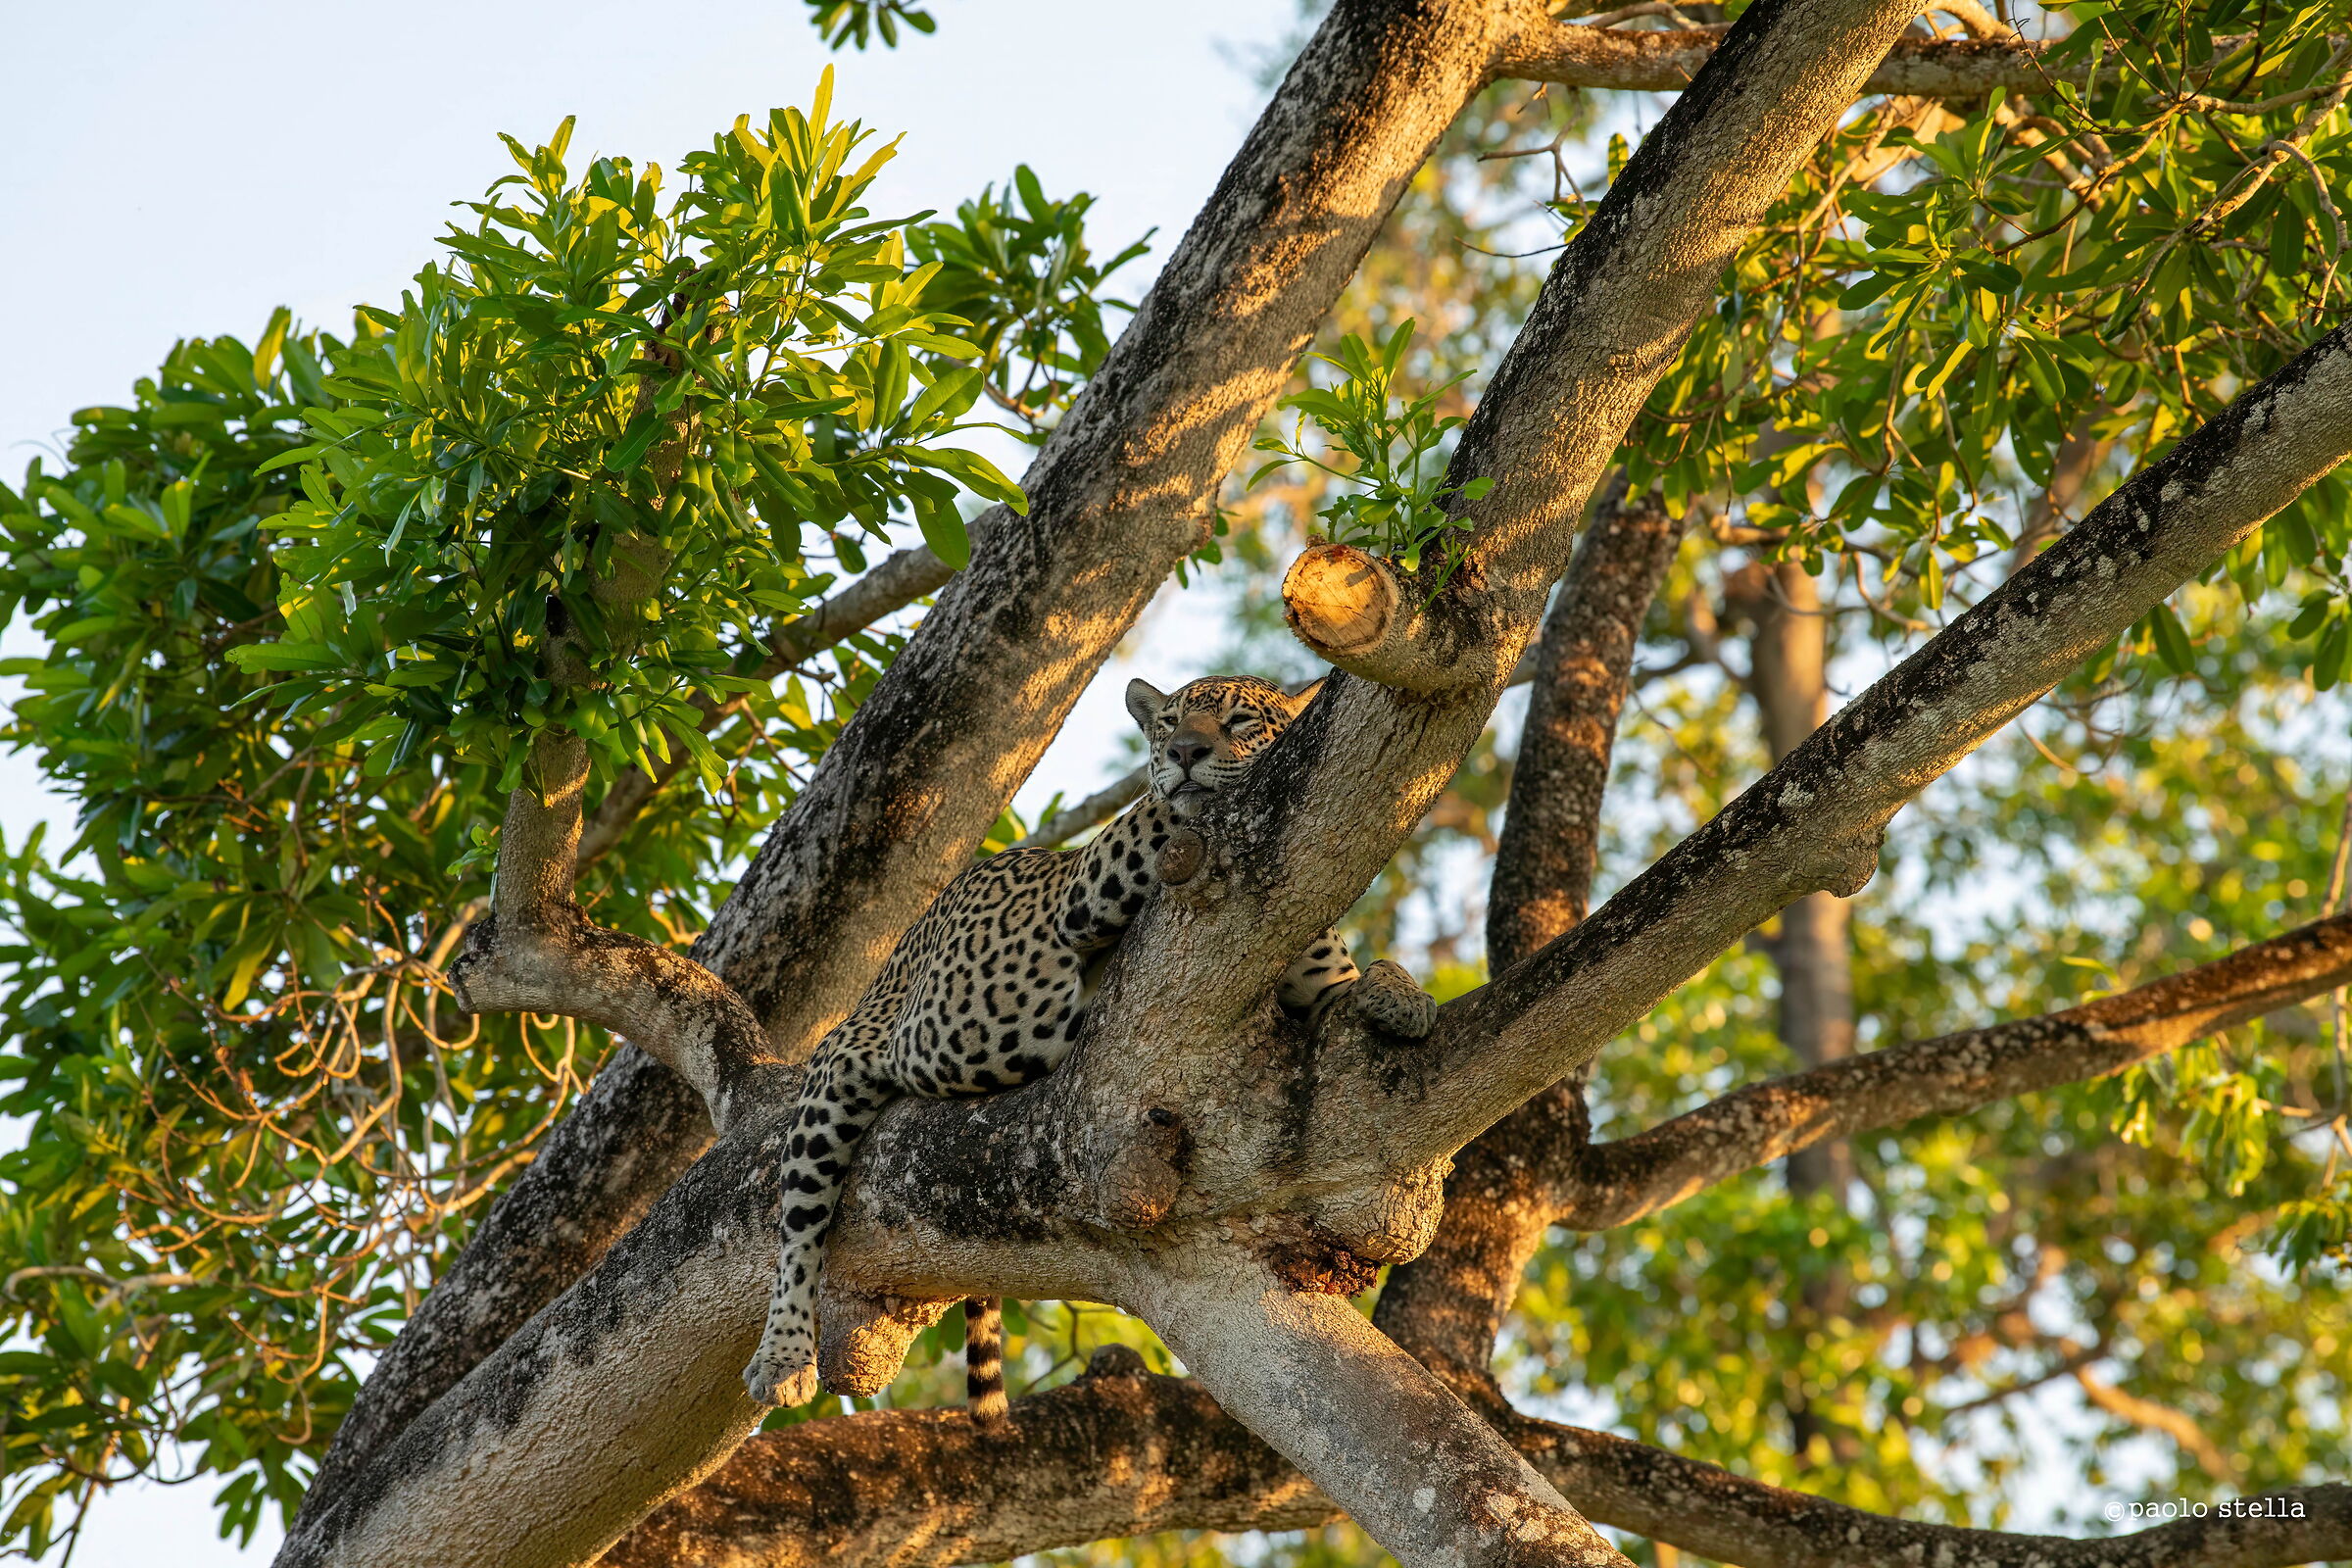 The jaguar on the branch...